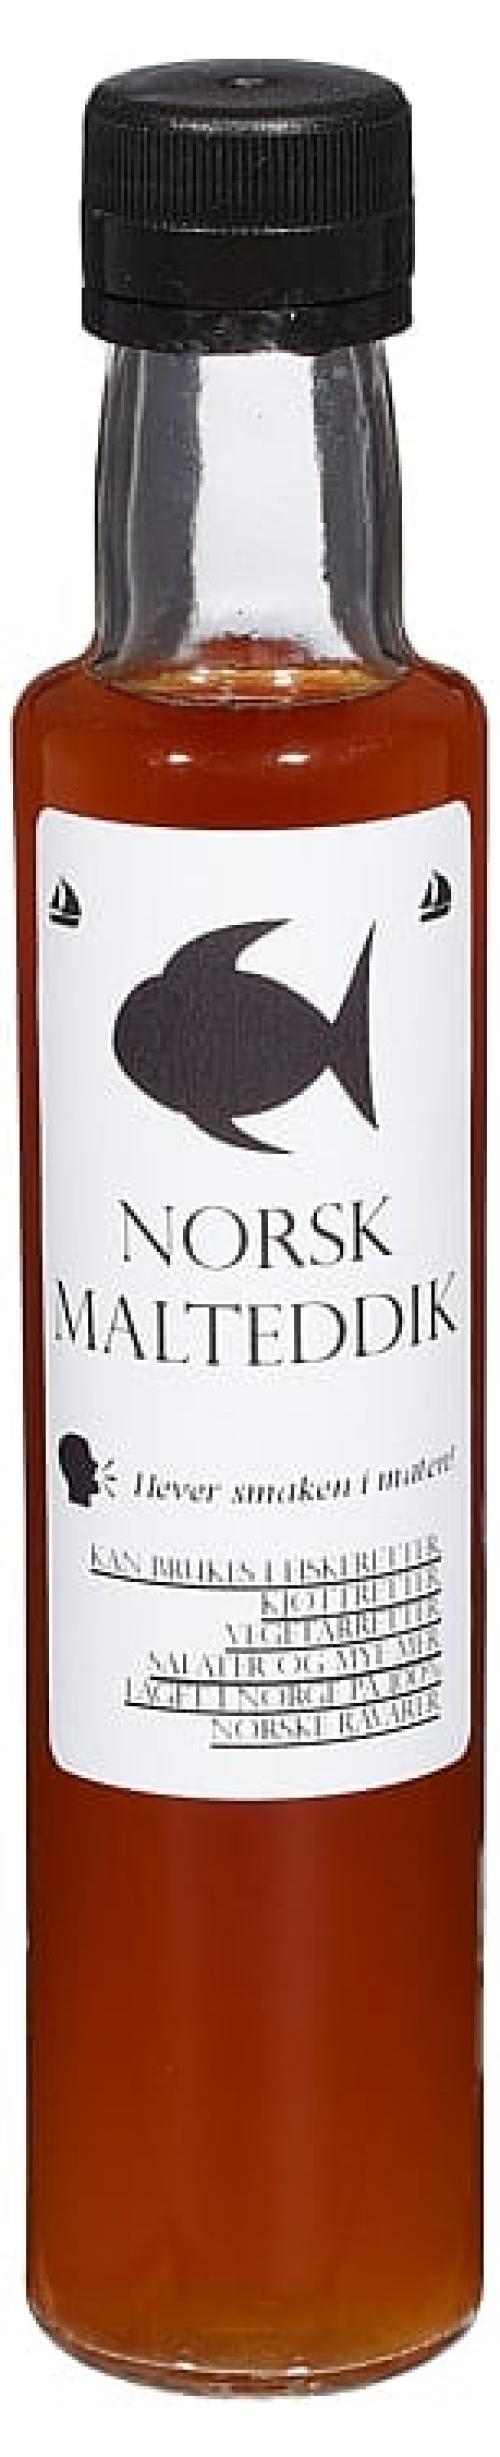 Norsk Malteddik 250ml